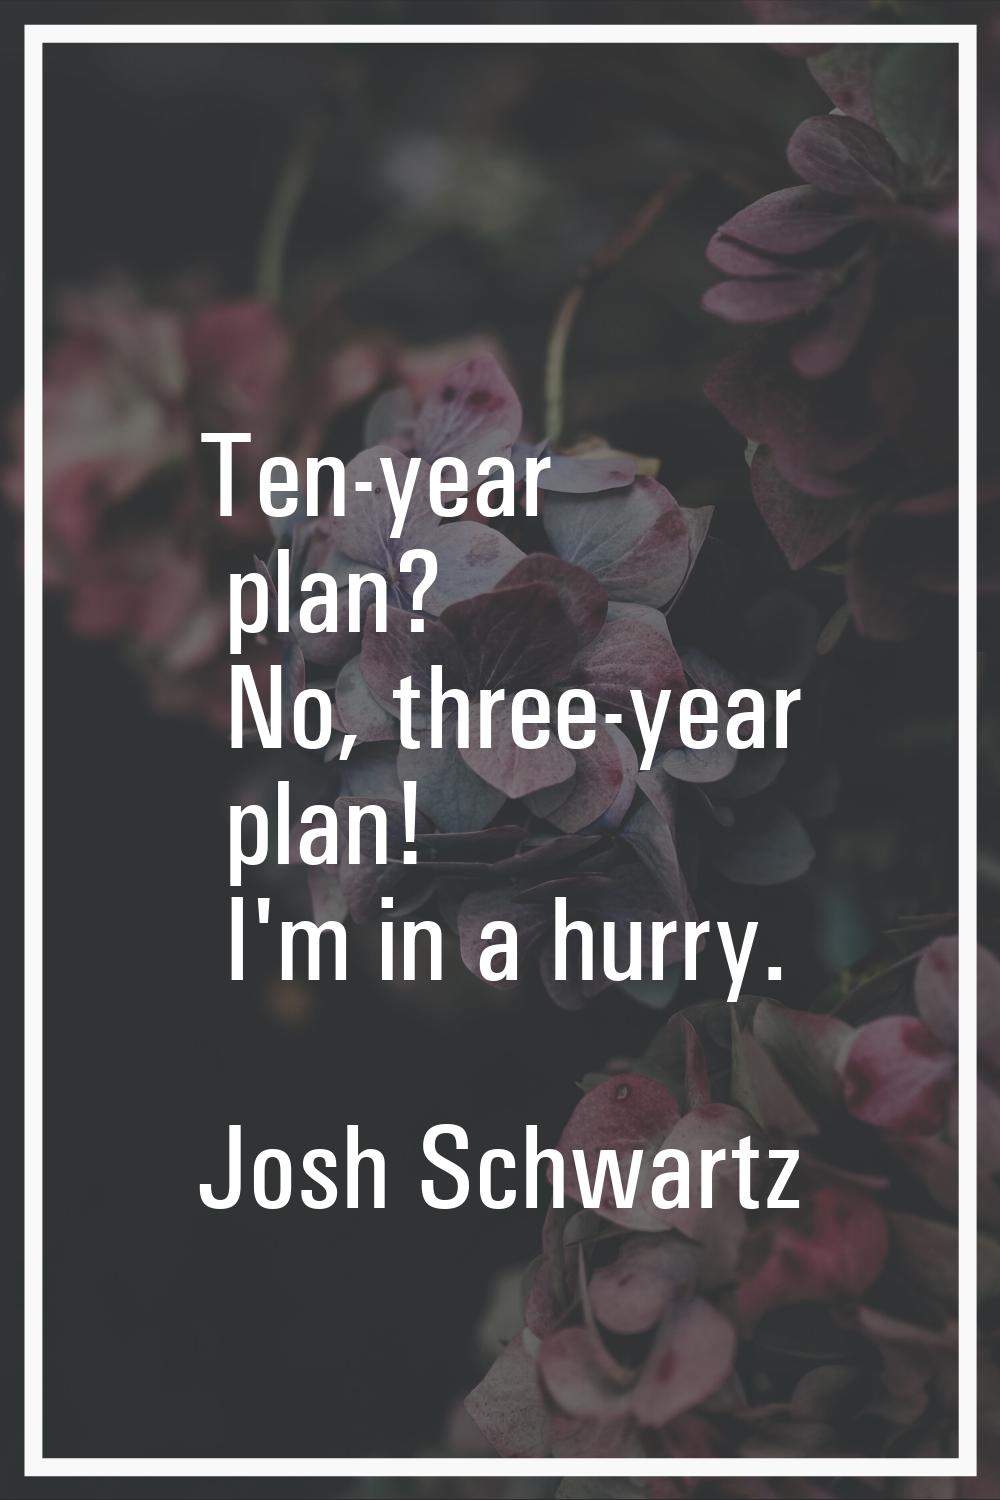 Ten-year plan? No, three-year plan! I'm in a hurry.